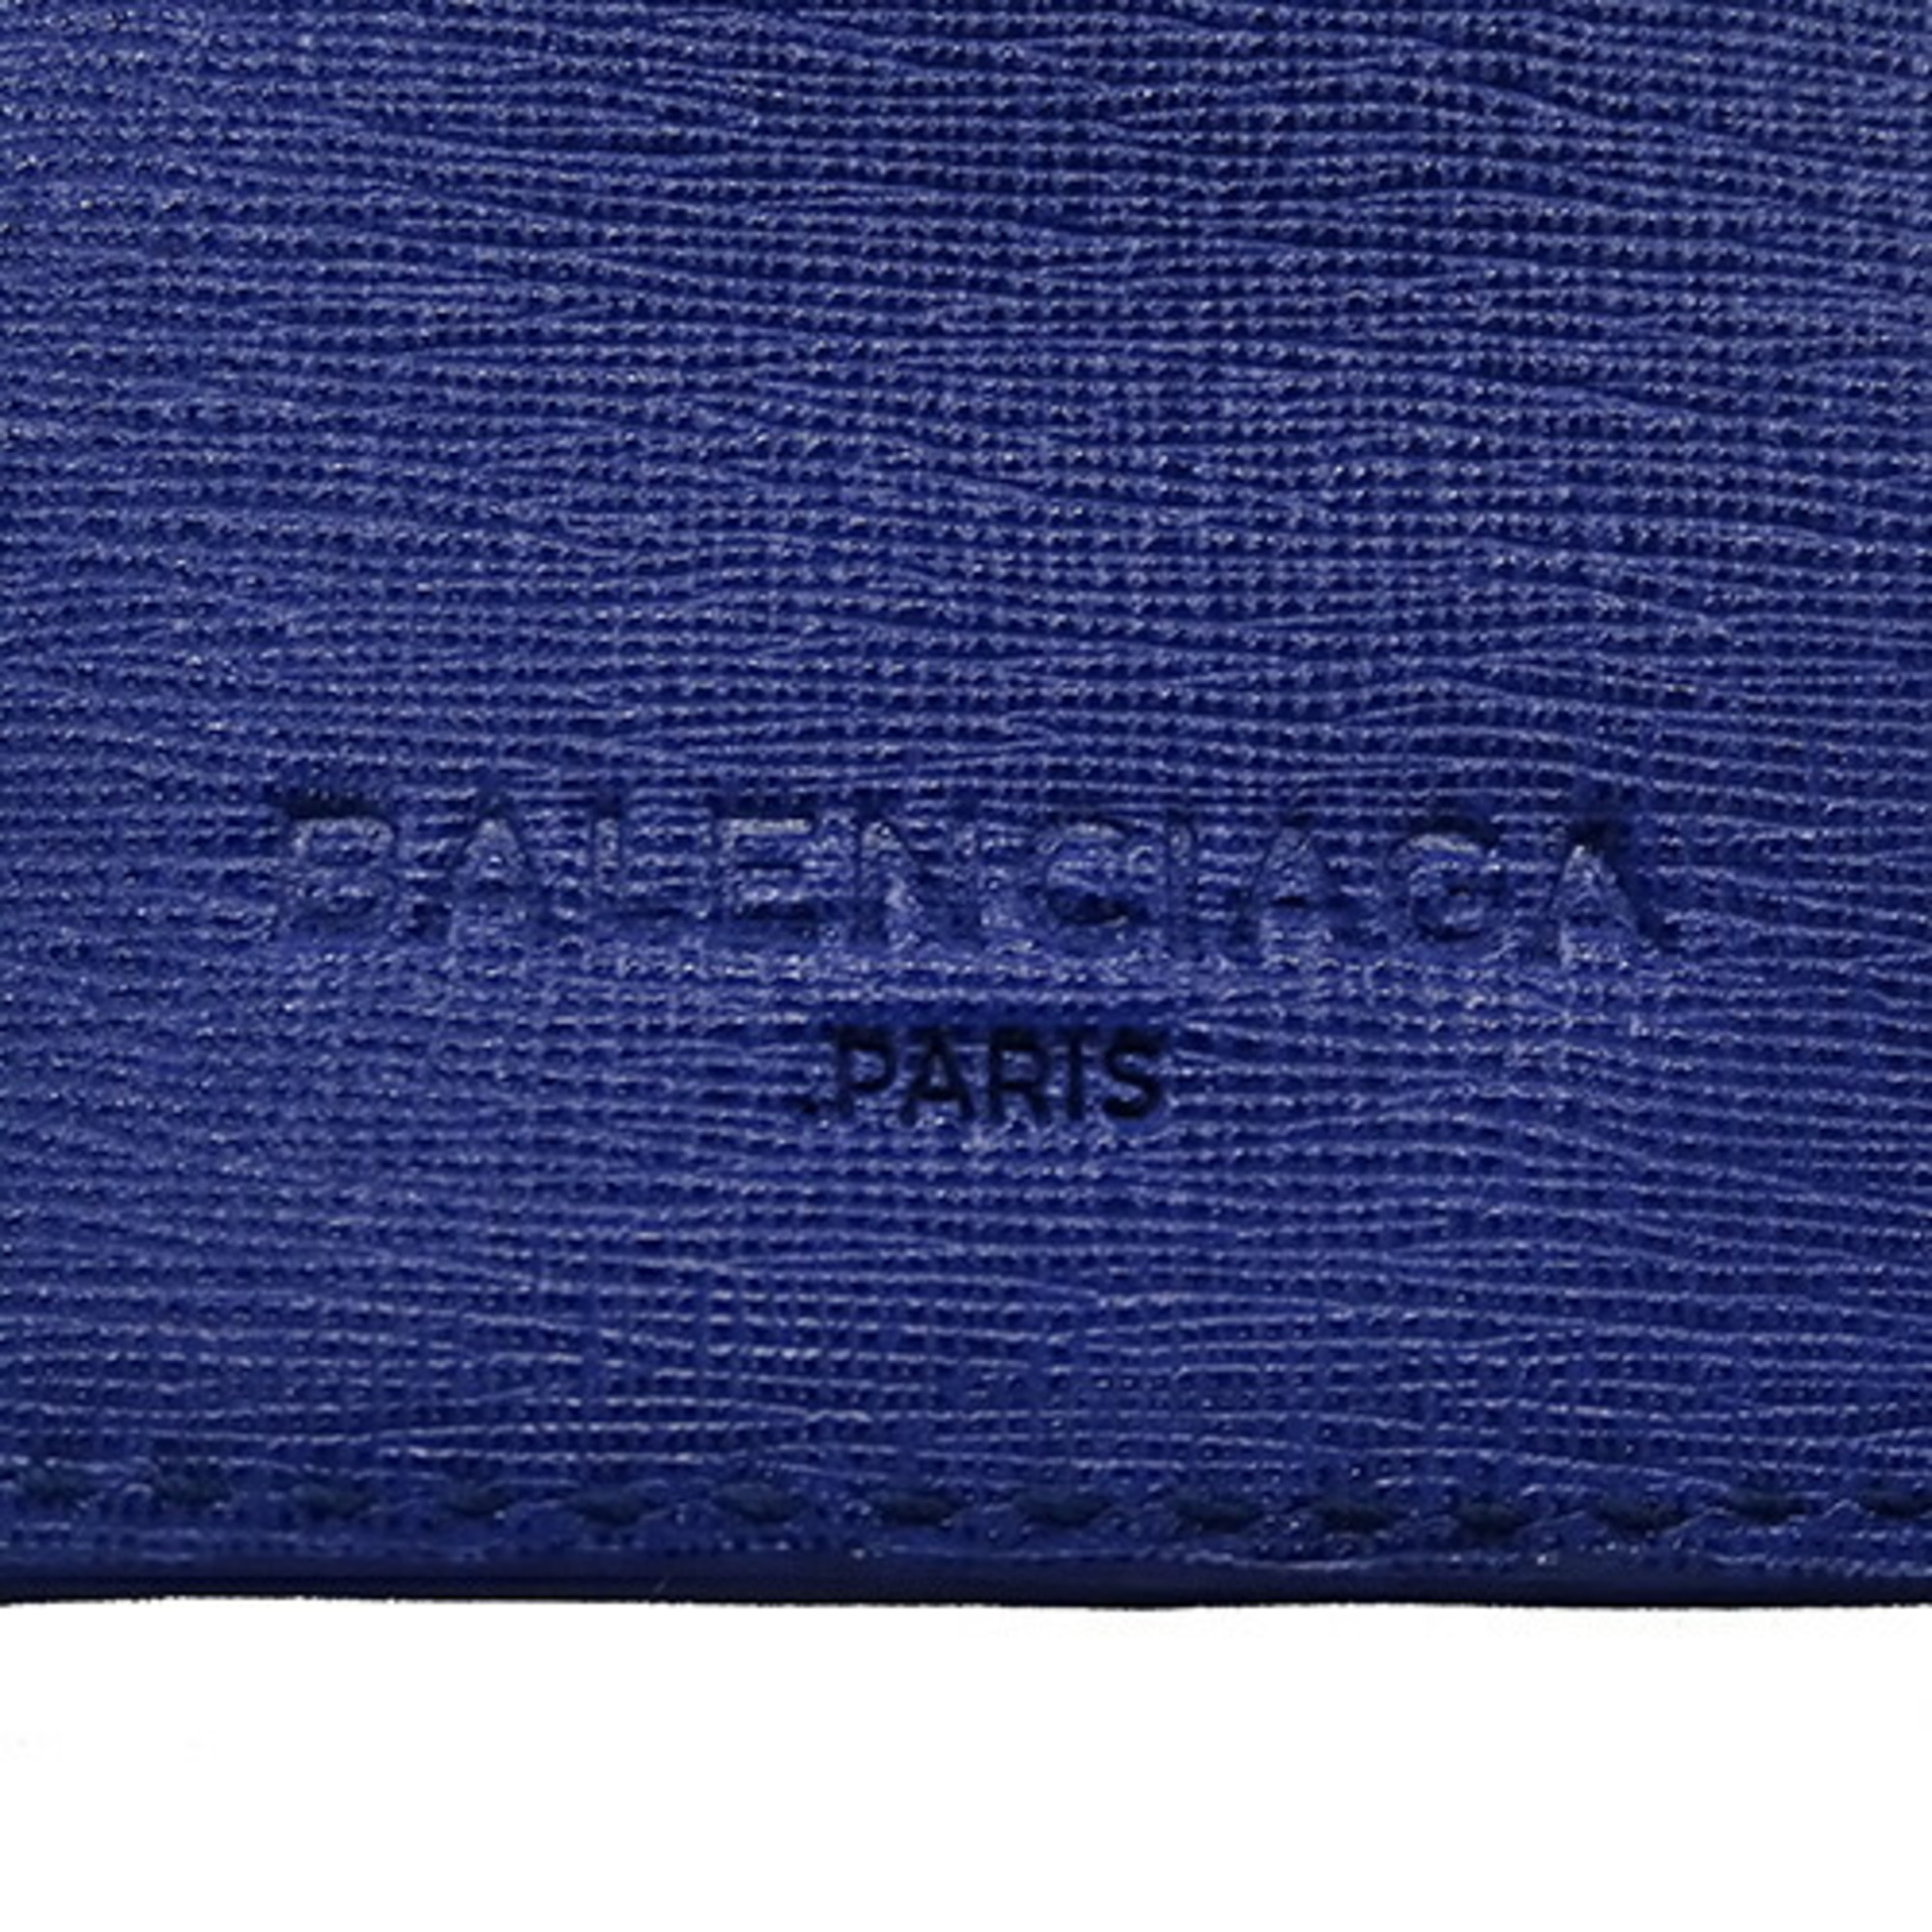 BALENCIAGA Wallet Women's Men's Trifold Leather Essential Blue White 410133 Compact